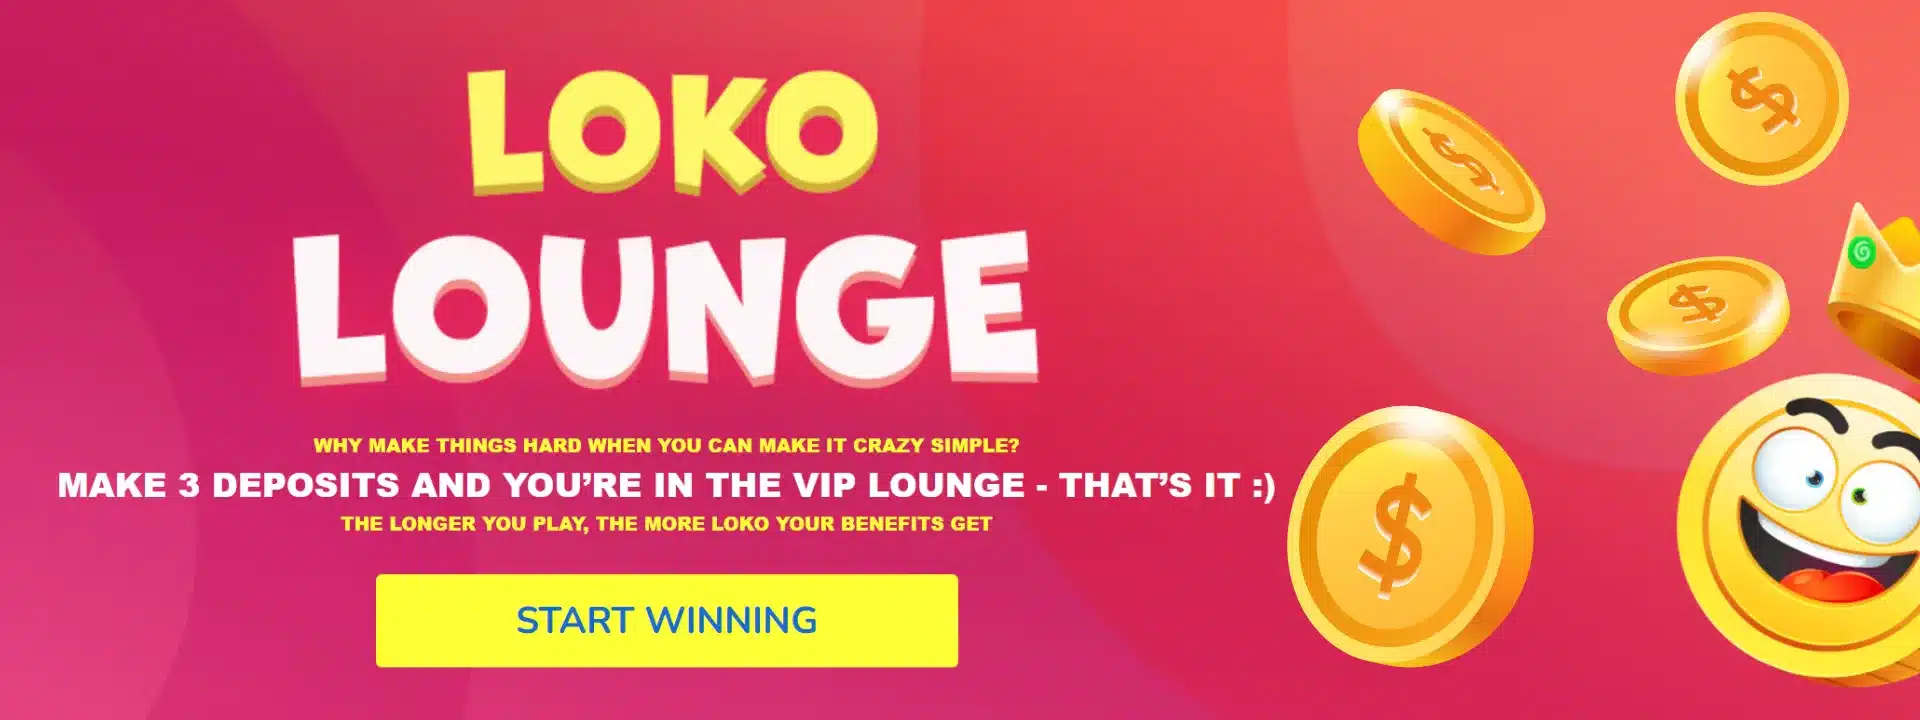 Crypto Loko Lounge VIP reward System